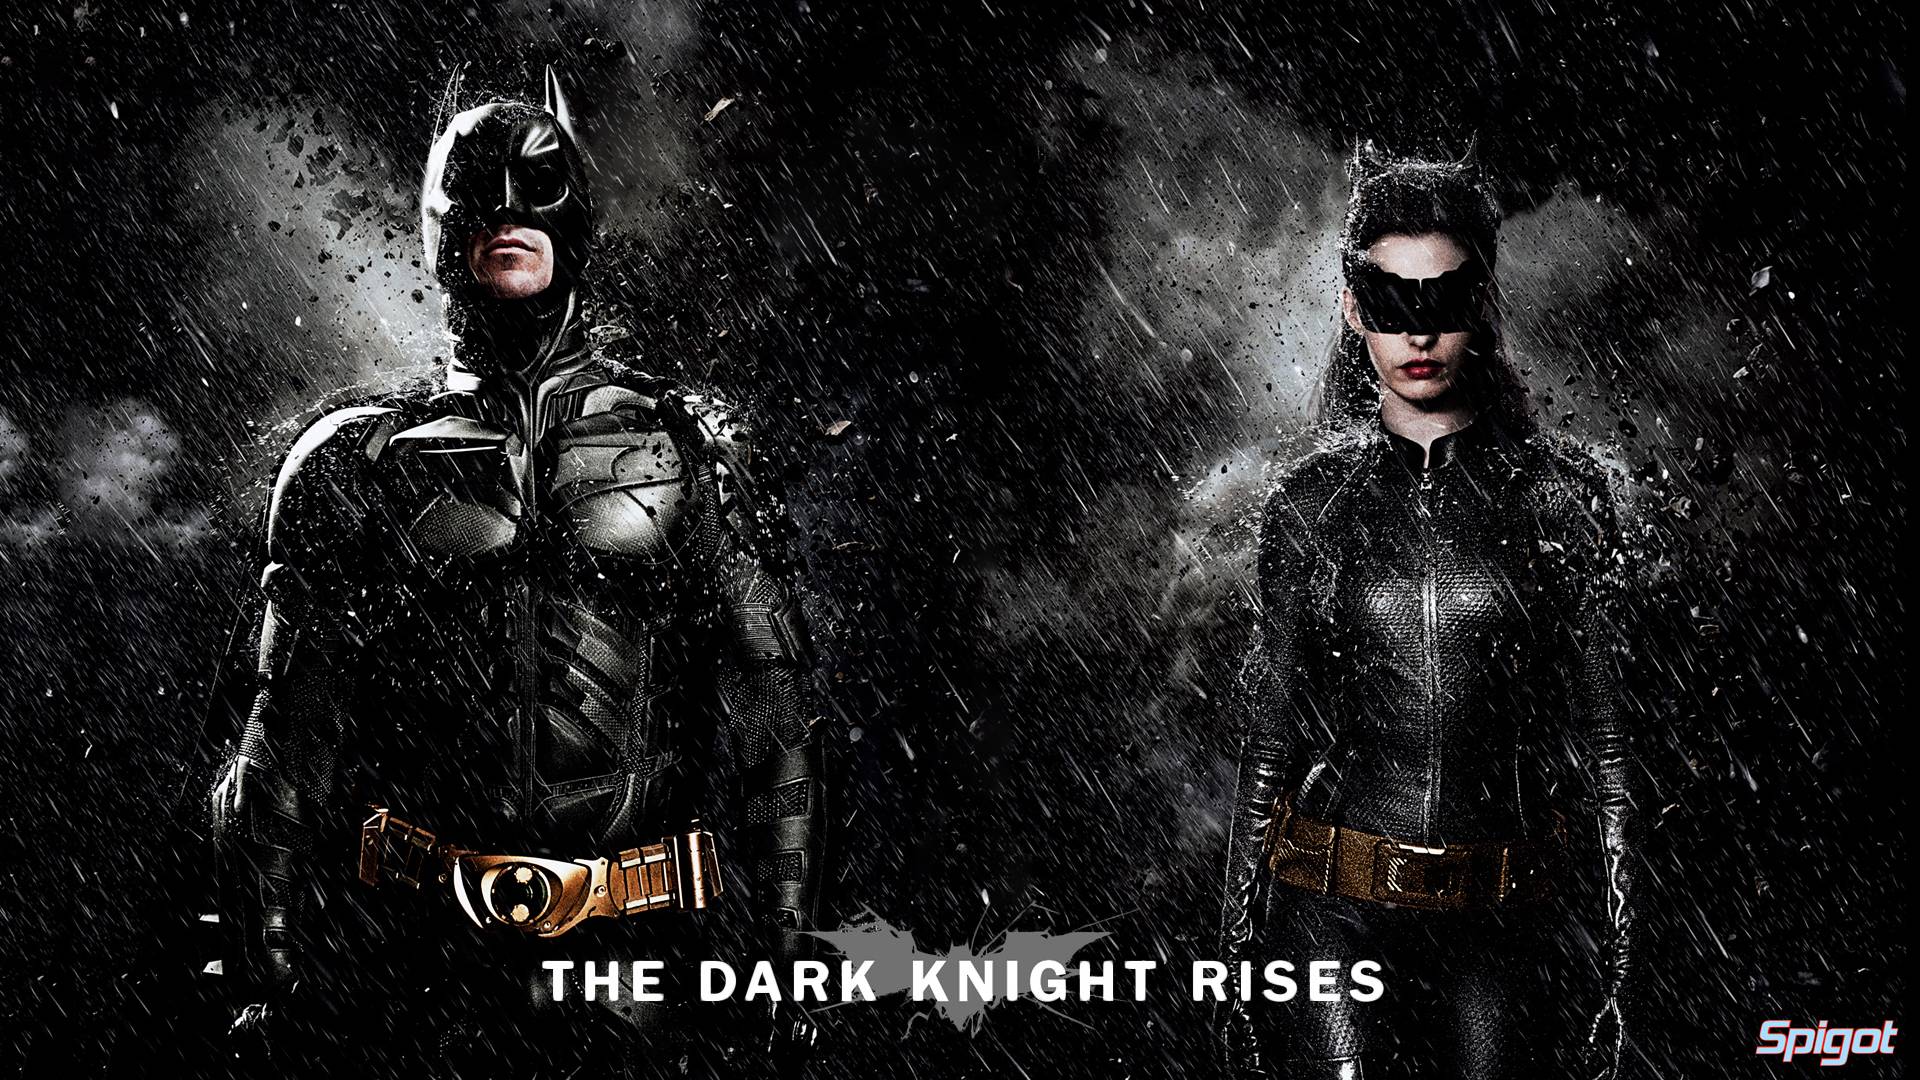 Dark Knight Rises Movie High Quality Wallpaper HD 1920x1080PX